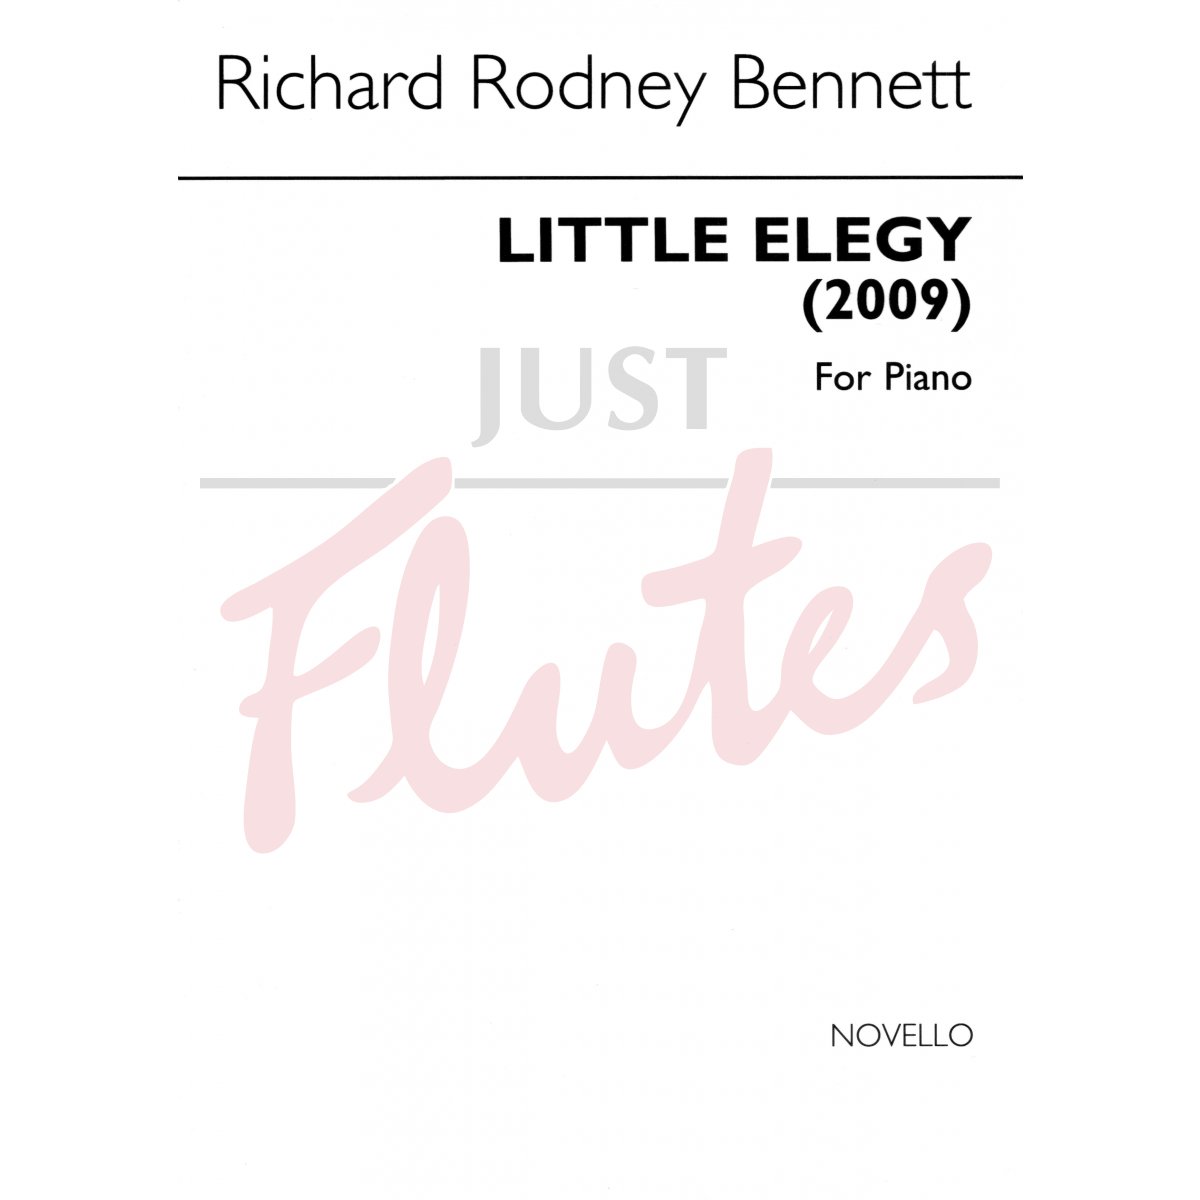 Little Elegy for Piano